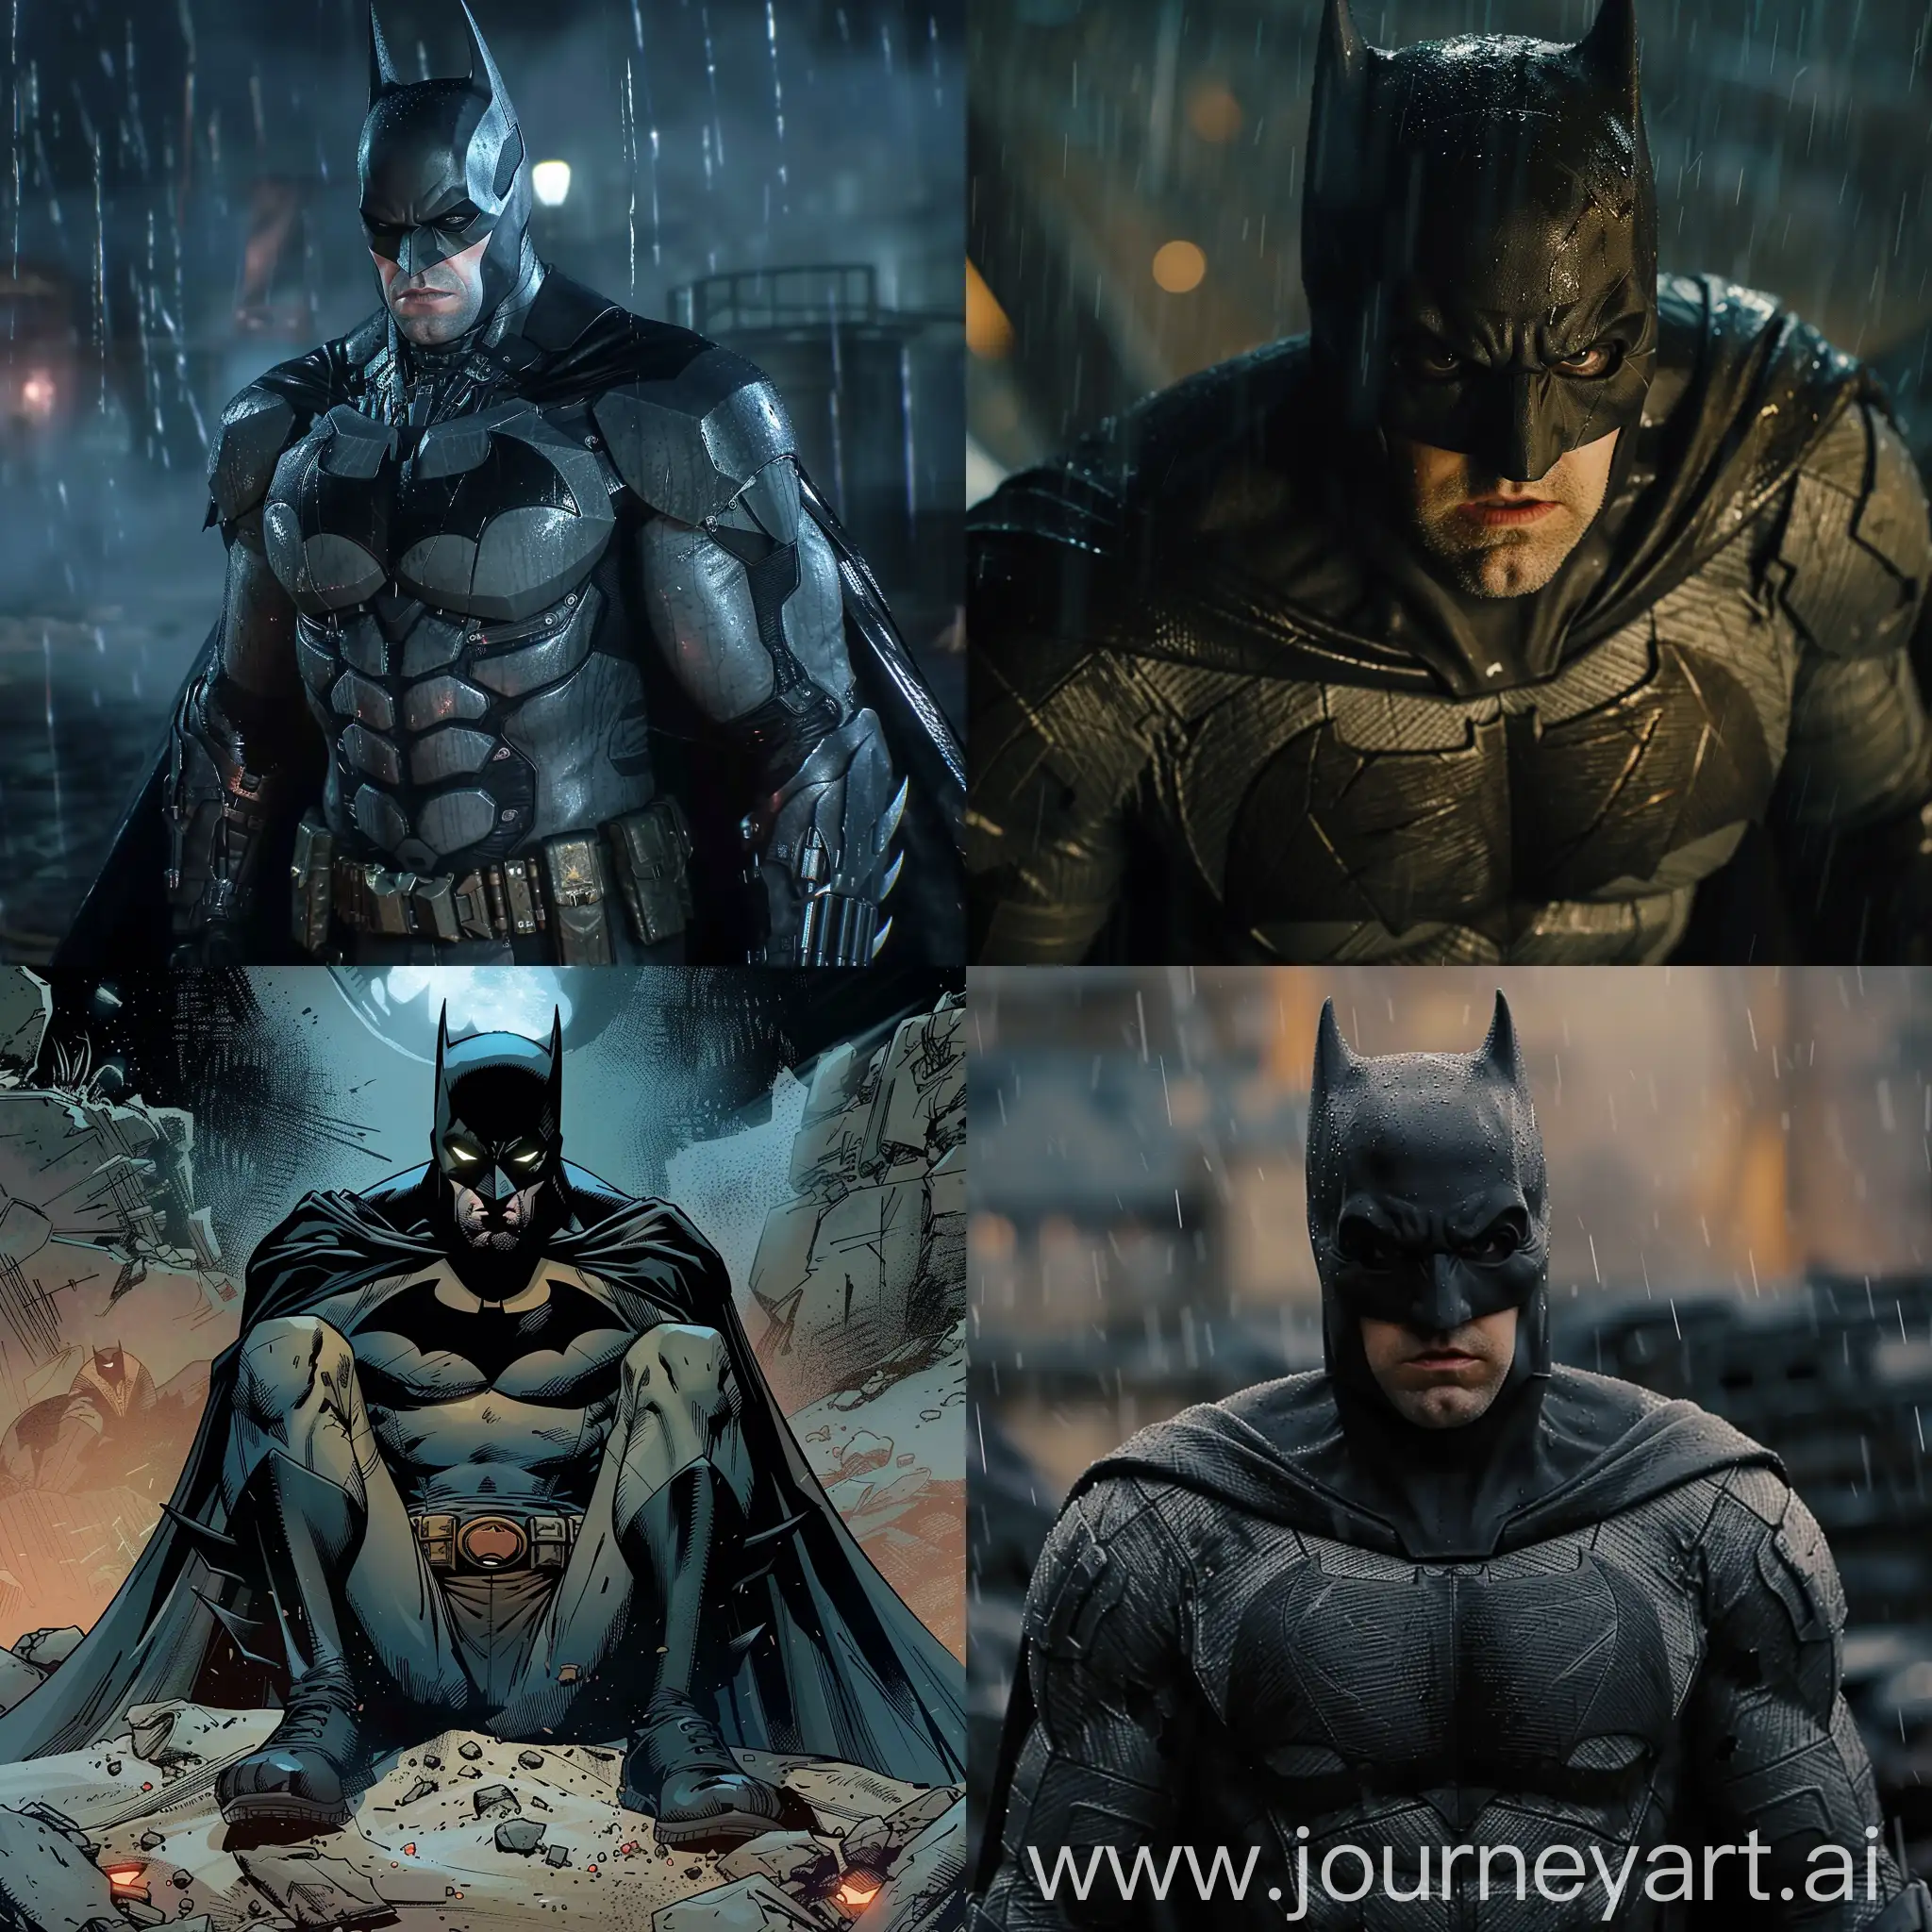 Batman-Action-Figure-Standing-Tall-in-Dark-Environment